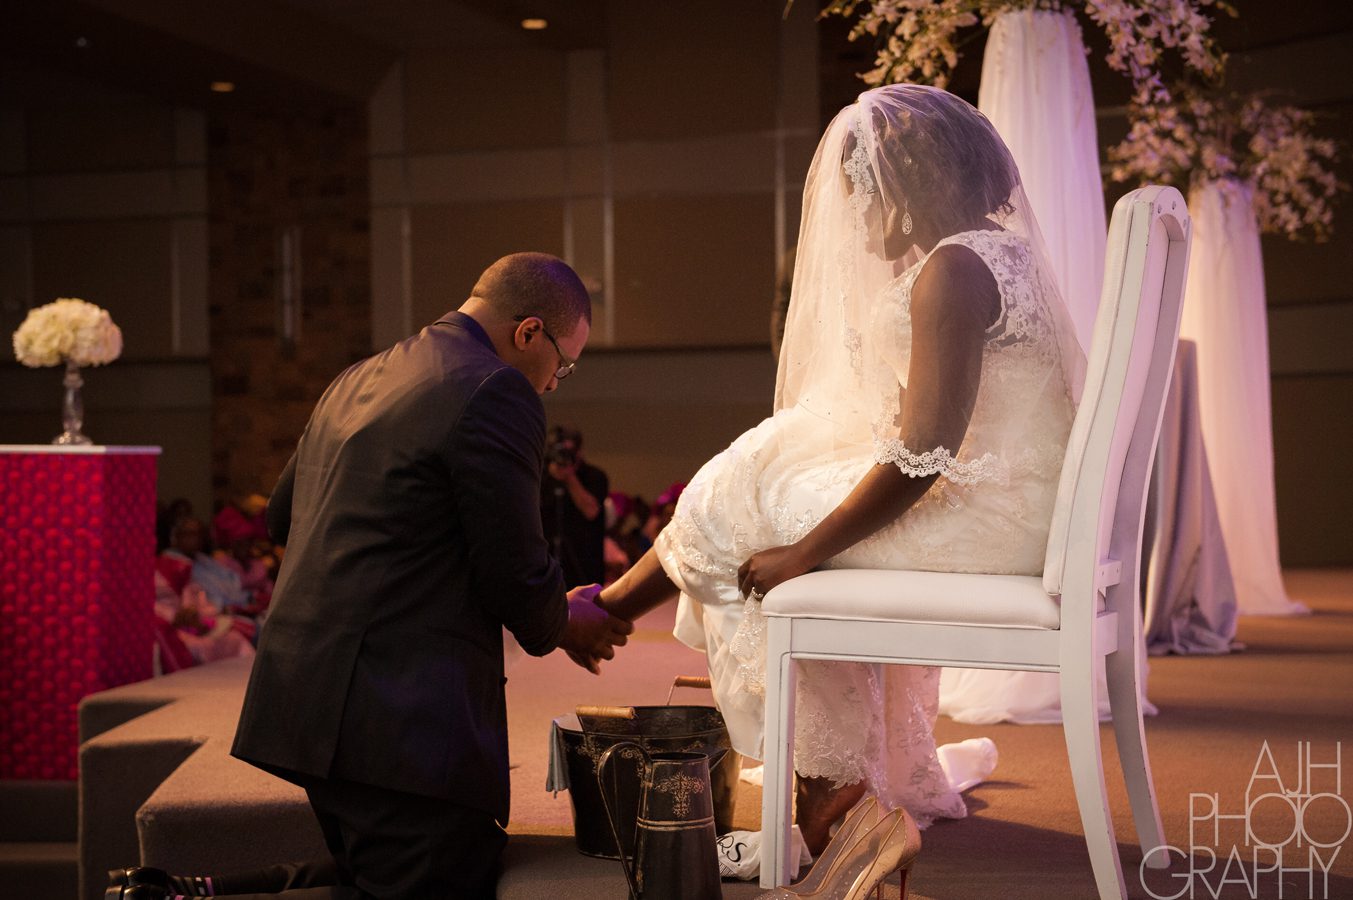 Nigerian wedding photography - AJH Photography